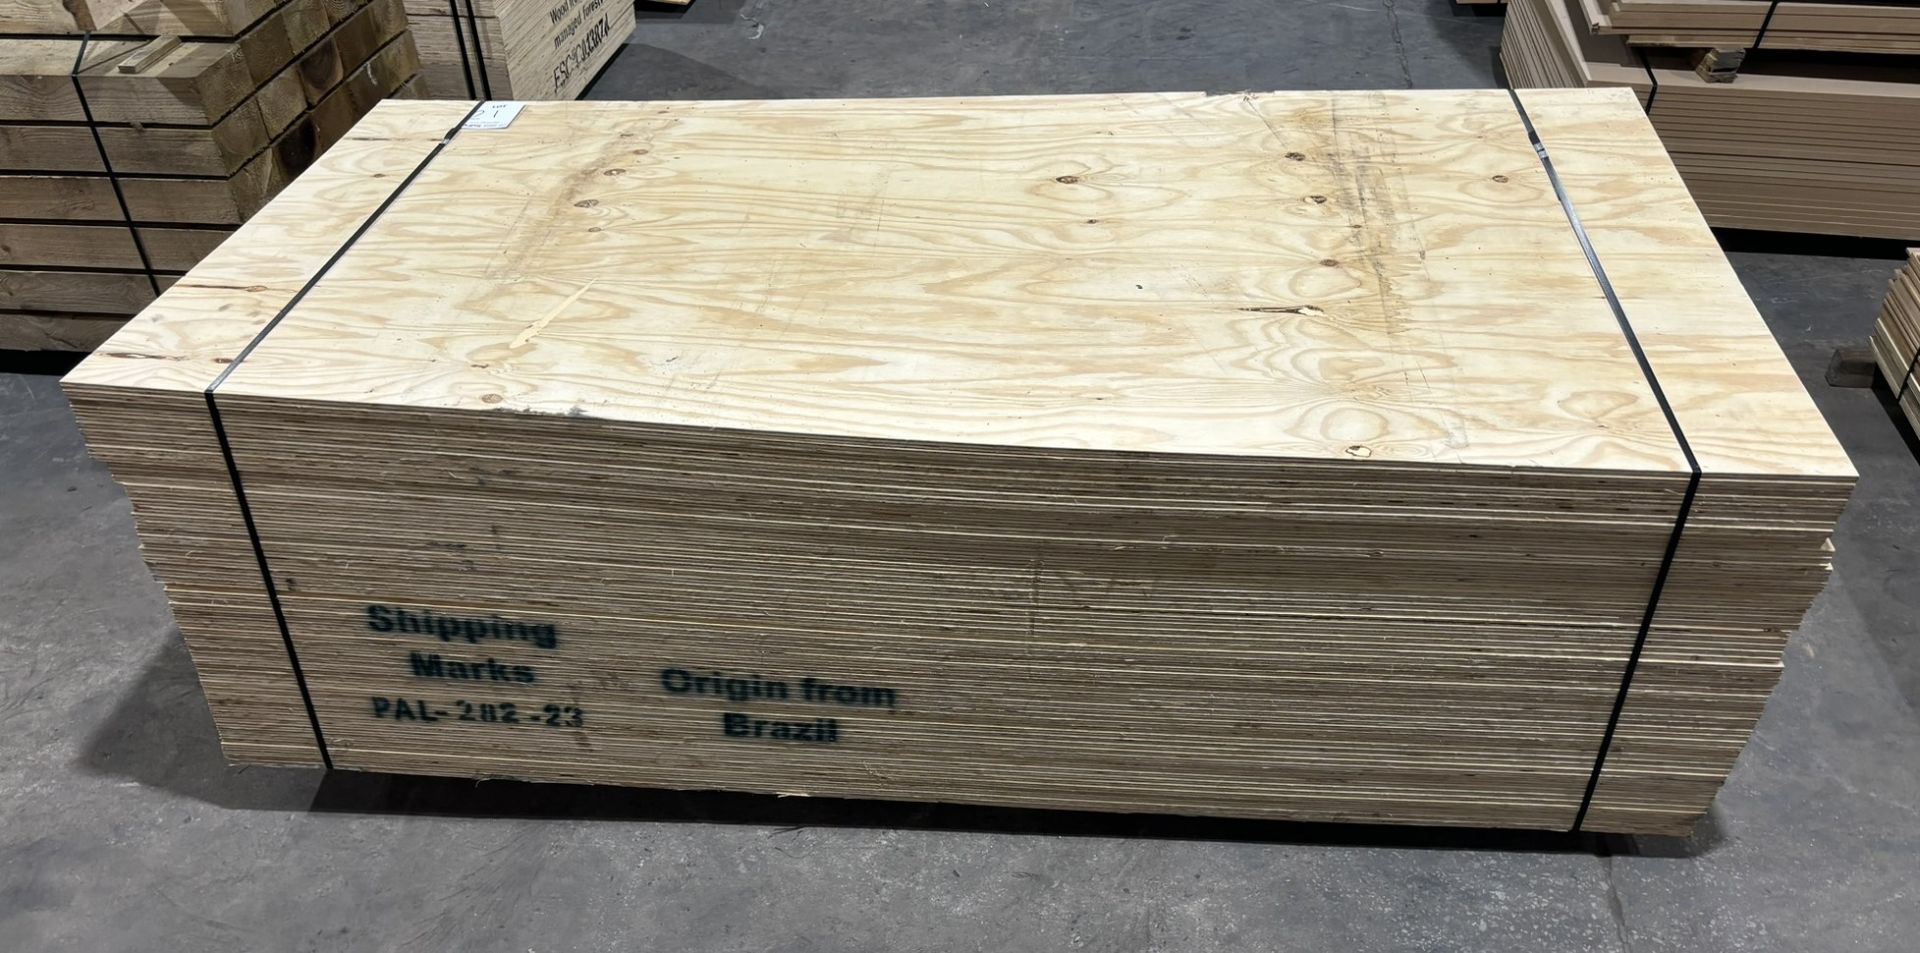 60 x Sheets Of Plywood | Size: 244cm x 122cm x 1cm